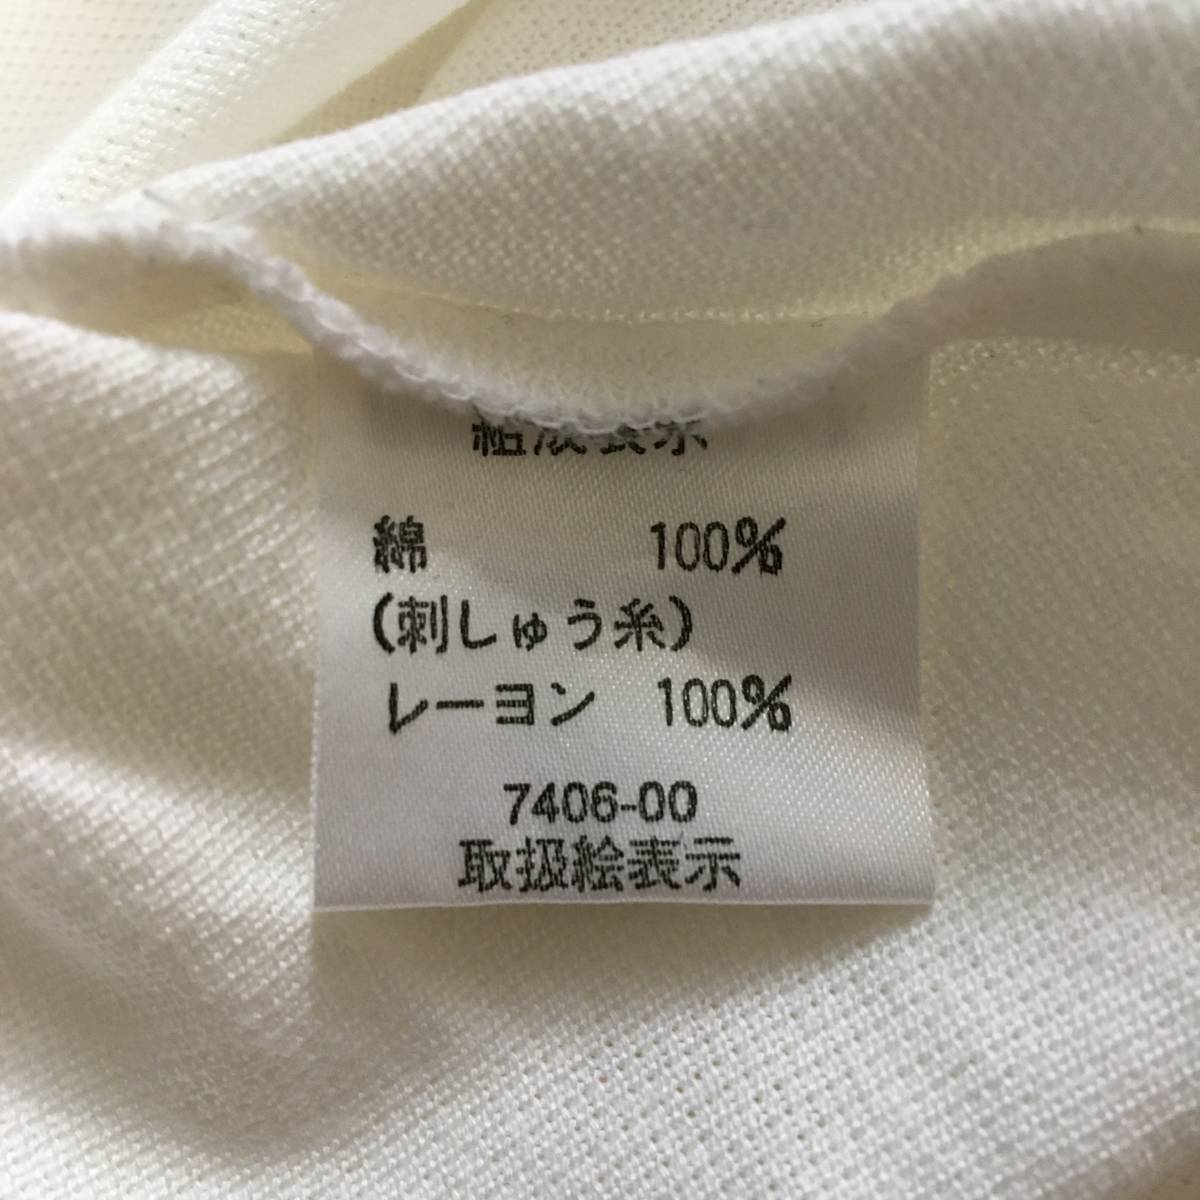  Suzuka circuit Motor Sport Club рубашка-поло мужской S размер белый / SUZUKA F1 GT MotoGP [YP-3320]